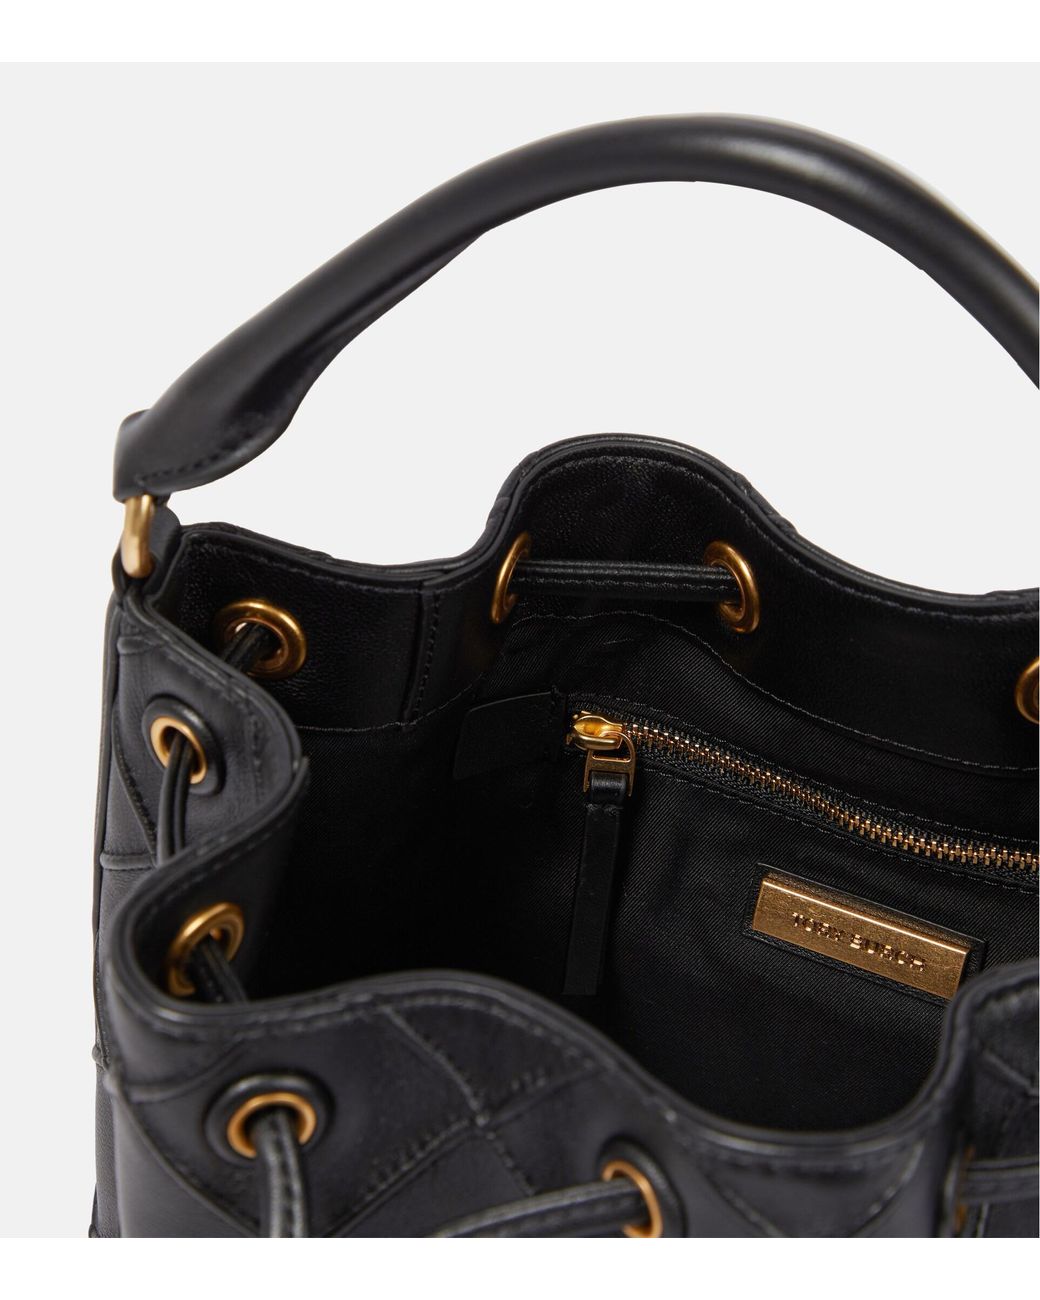 Tory Burch Fleming Leather Bucket Bag- Black 48895-001 190041867592 -  Handbags, Fleming - Jomashop